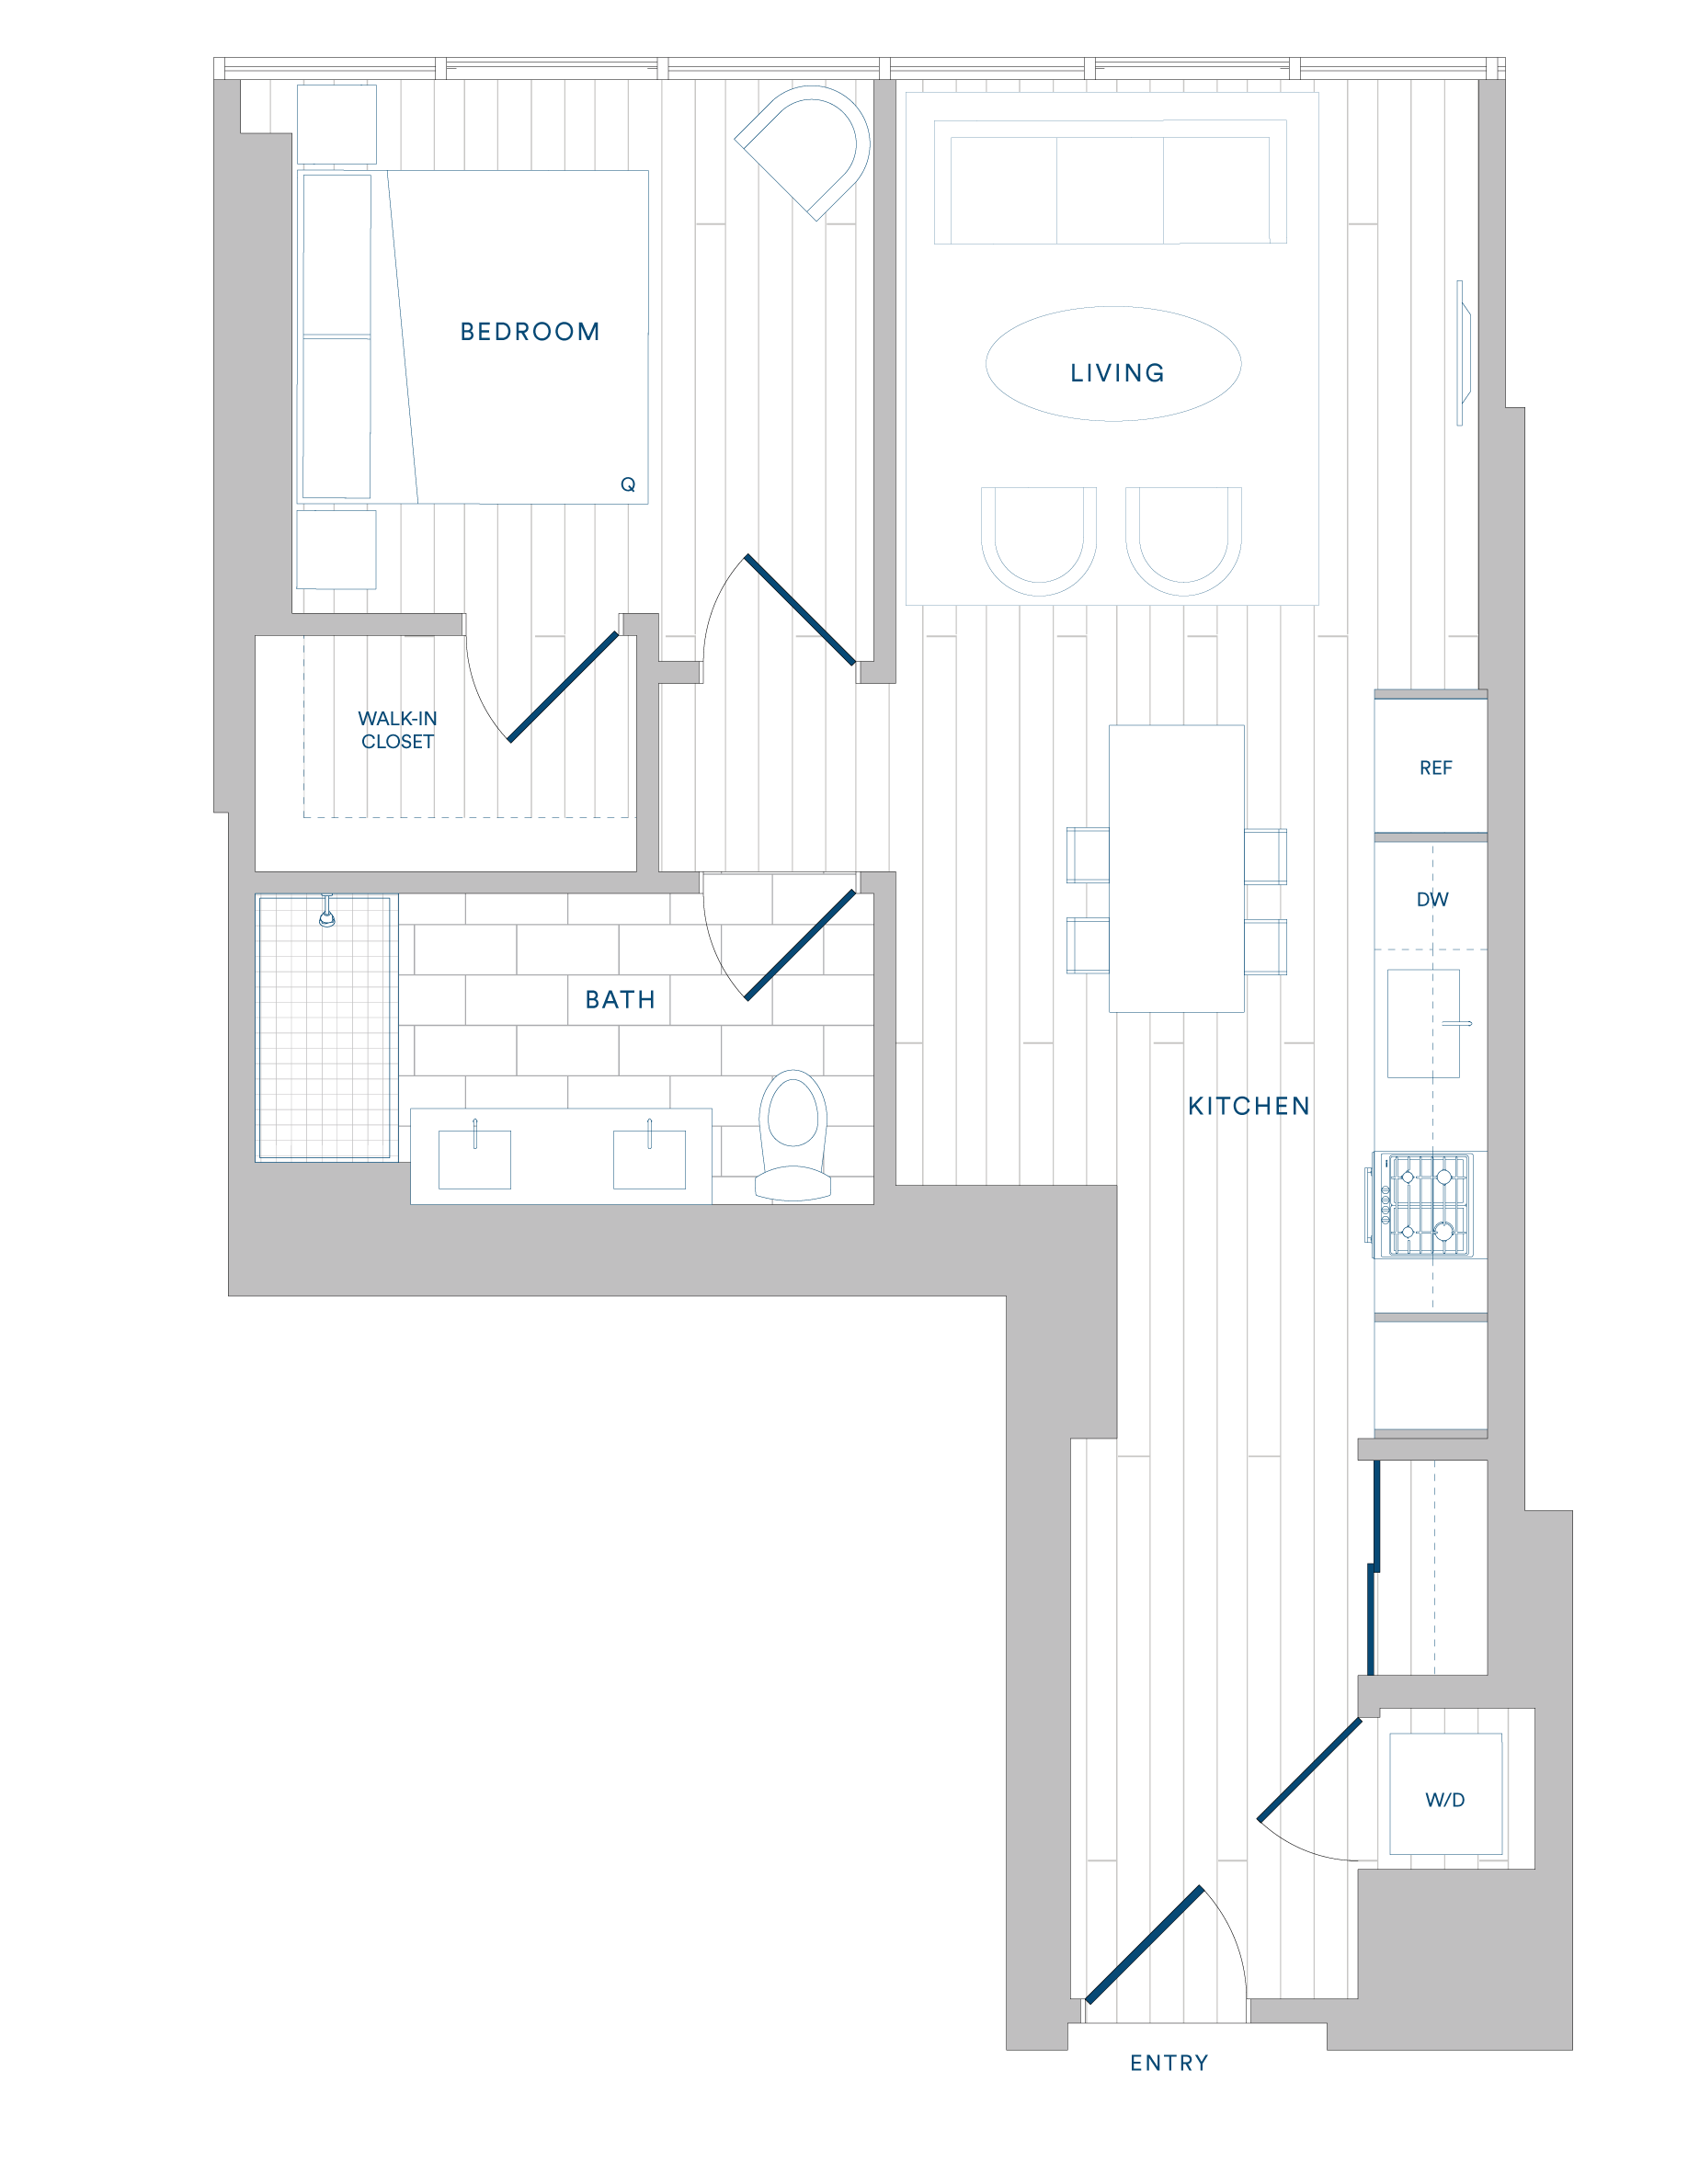 Floorplan for Apartment #921, 1 bedroom unit at Margarite